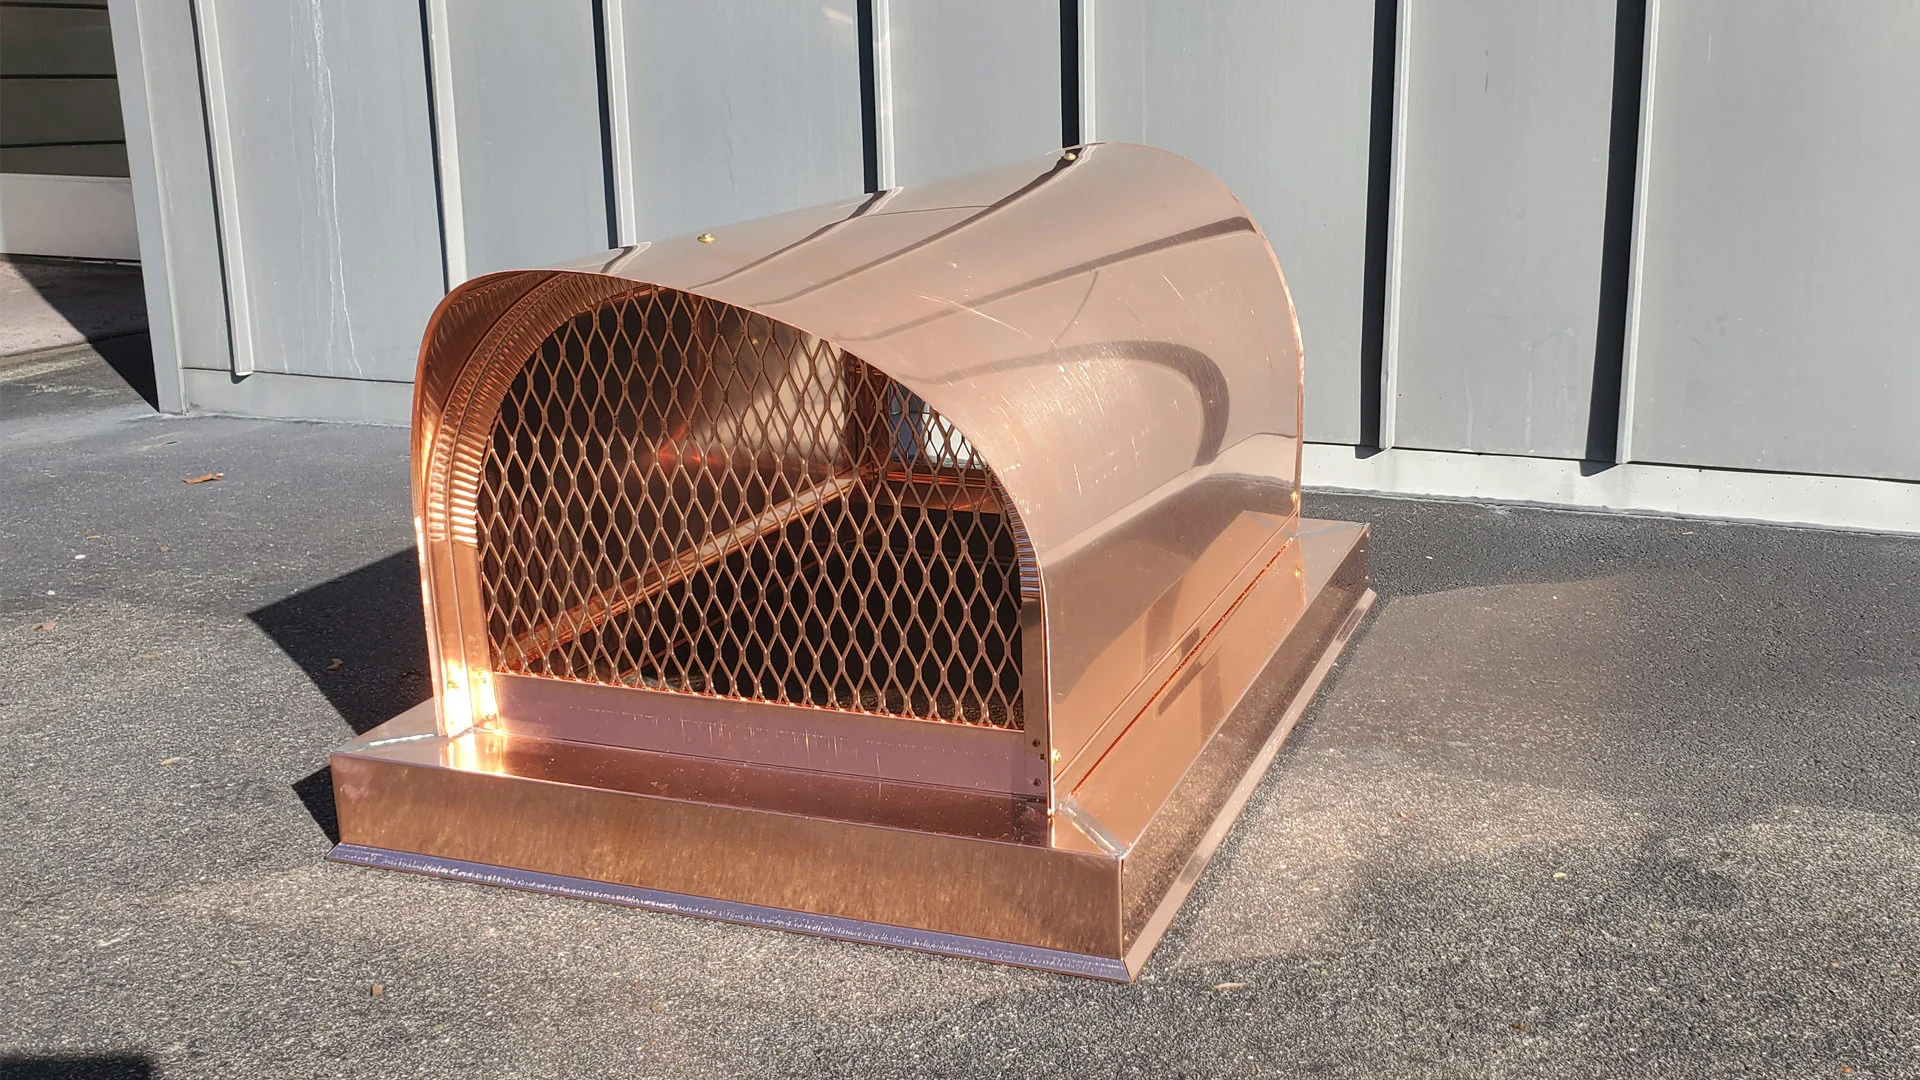 CC105 - Covered wagon round roof multi flue chimney cap copper